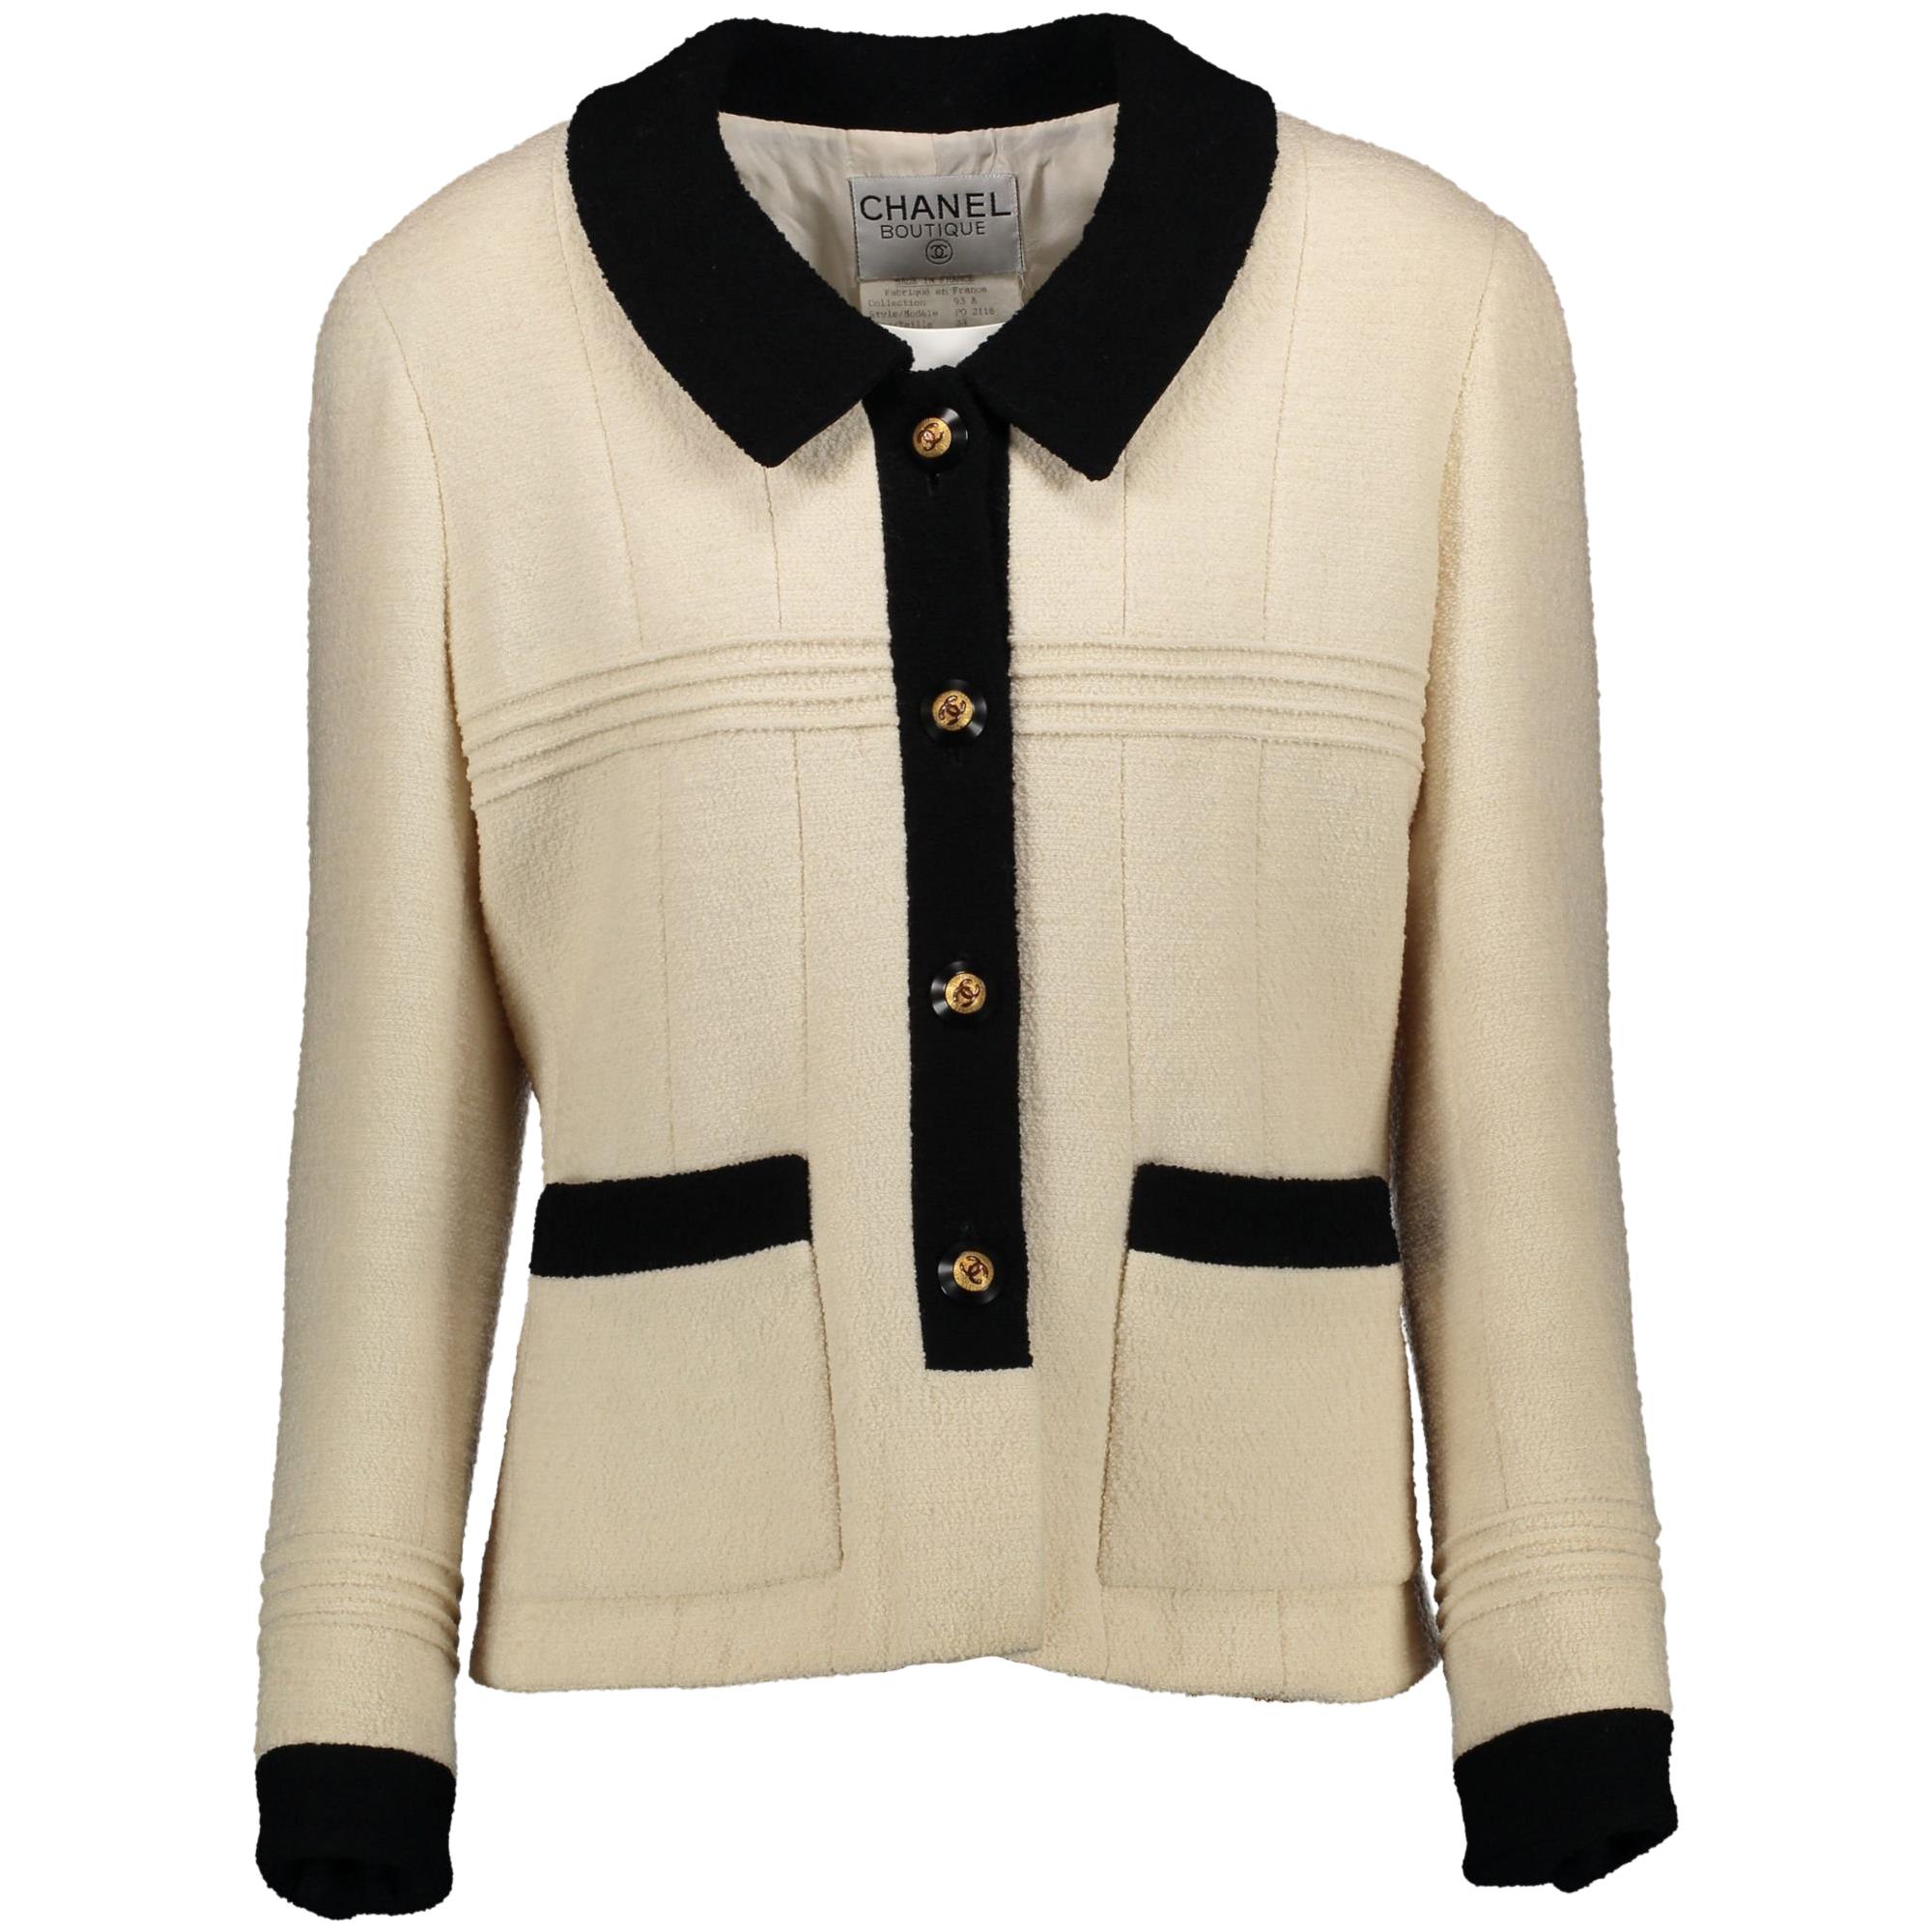 Chanel Black And White Tweed Jacket - Size 36